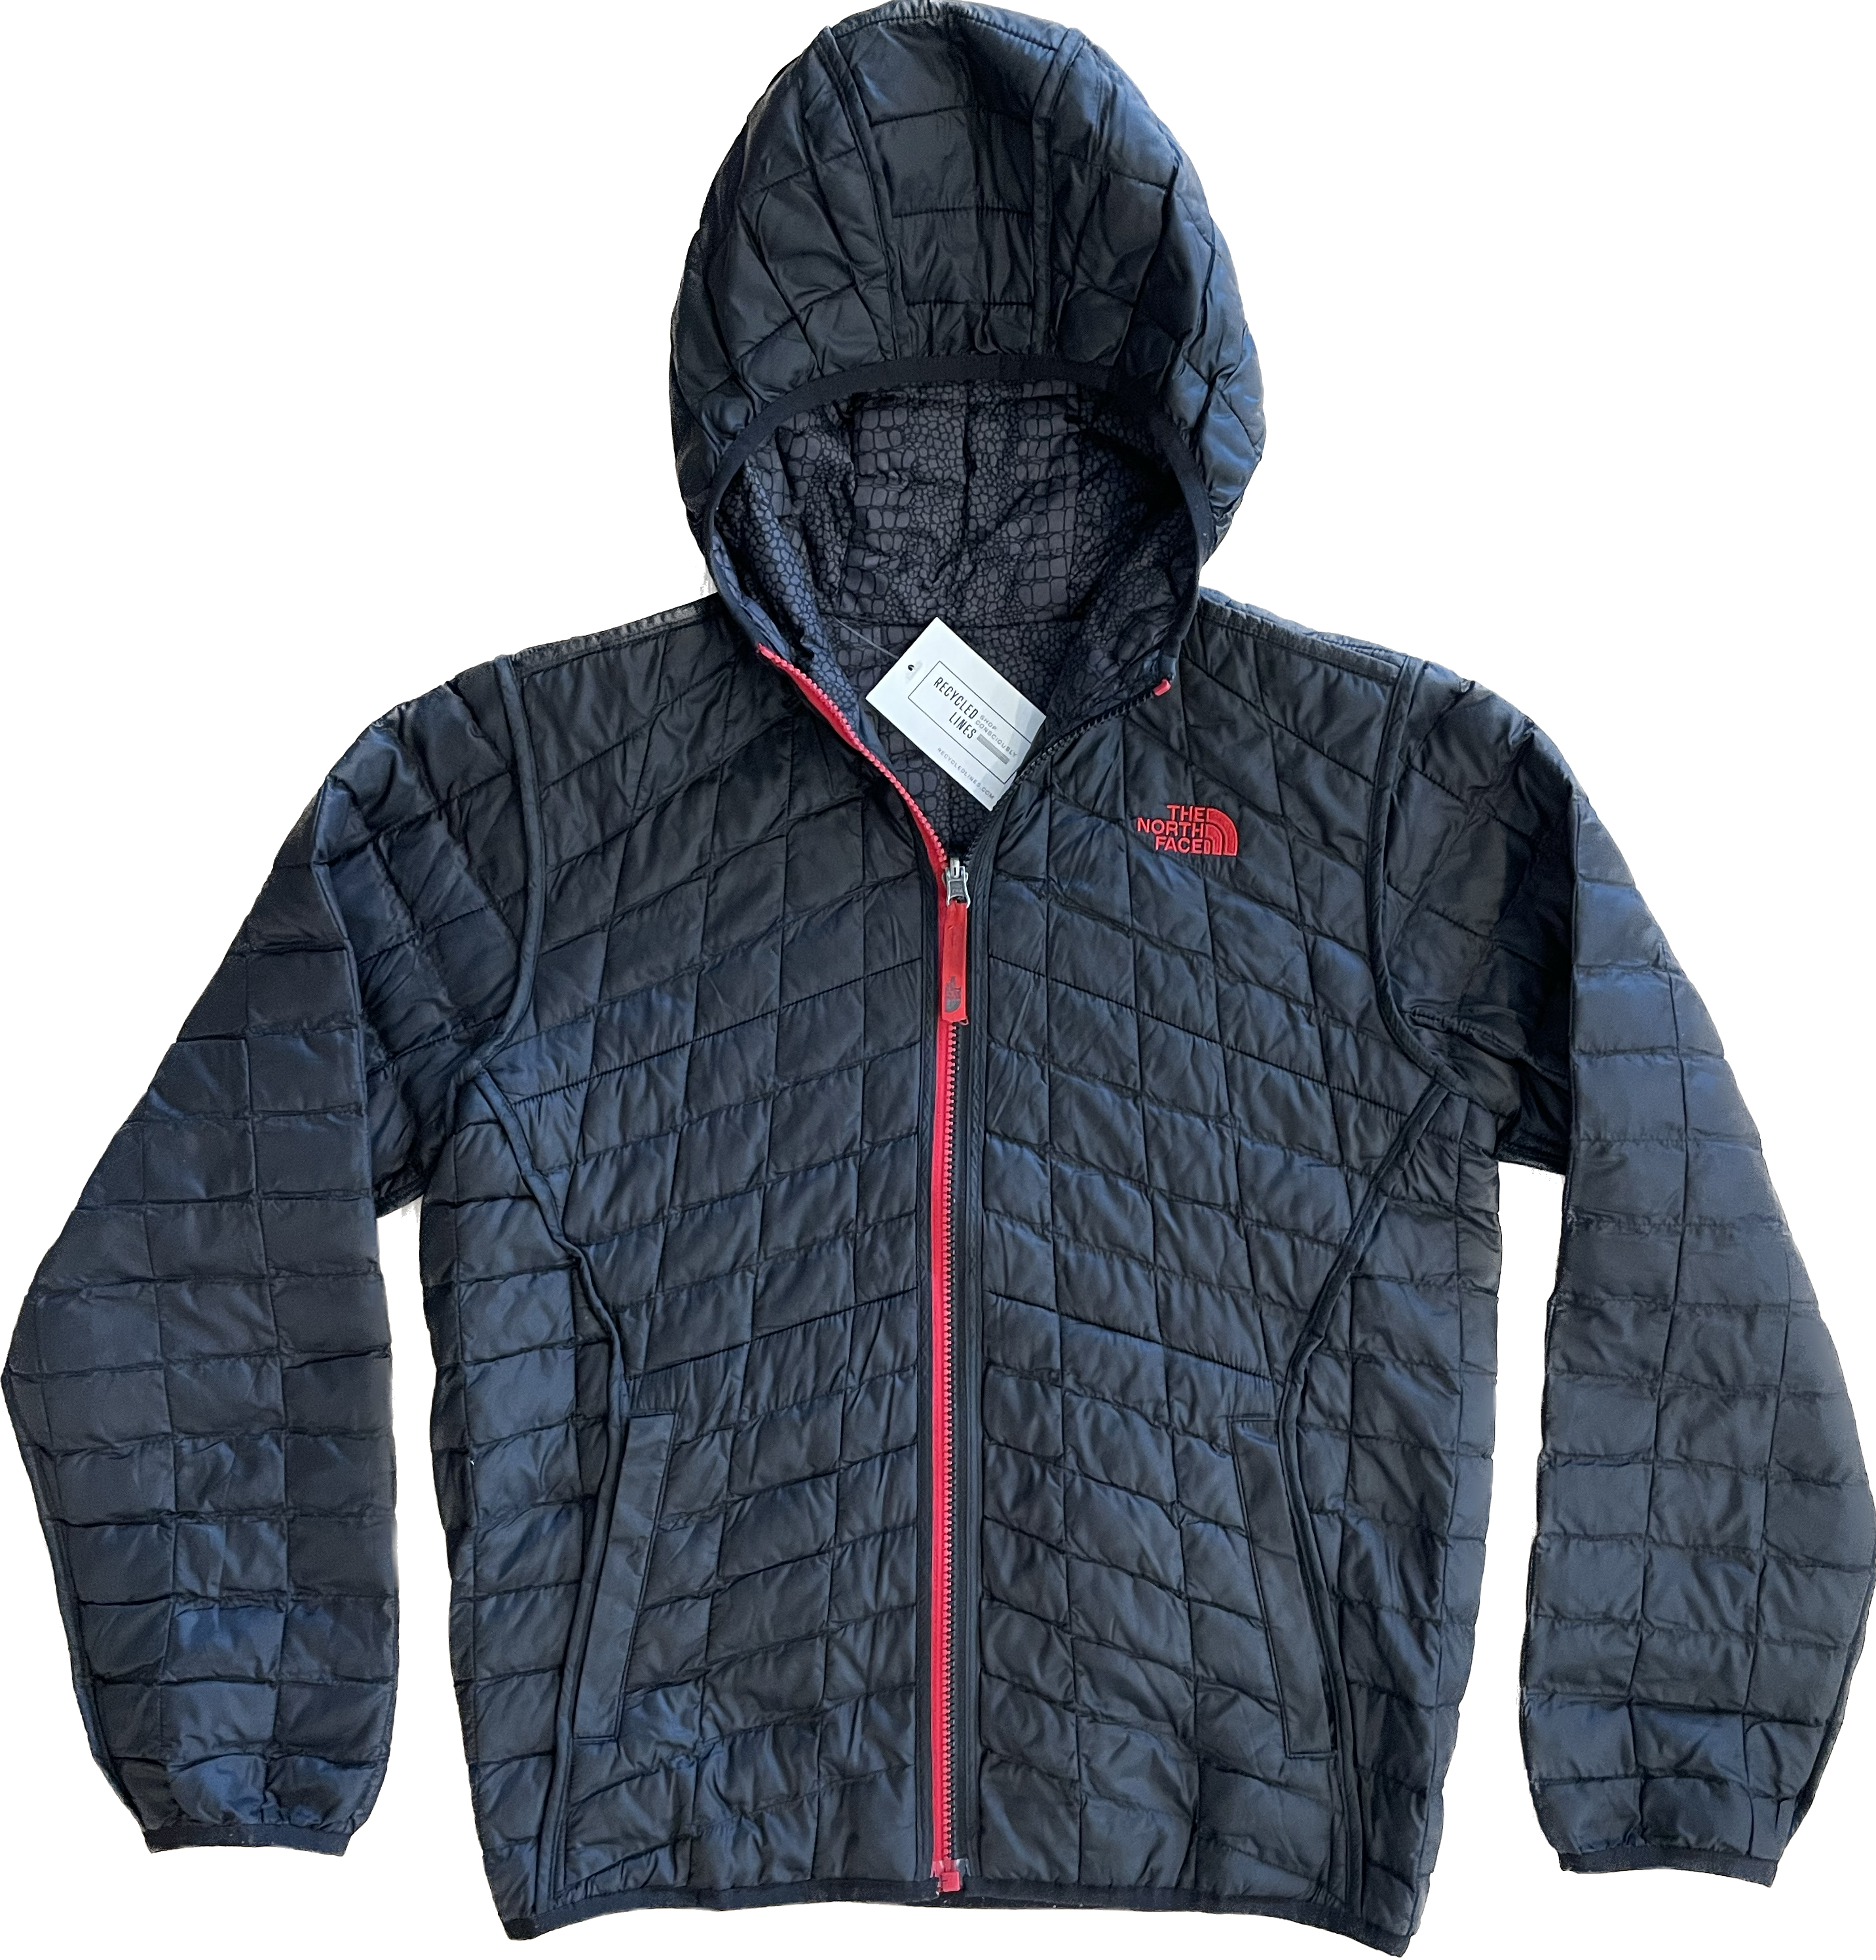 North Face Reversible Jacket, Black Boys Size L (14-16)